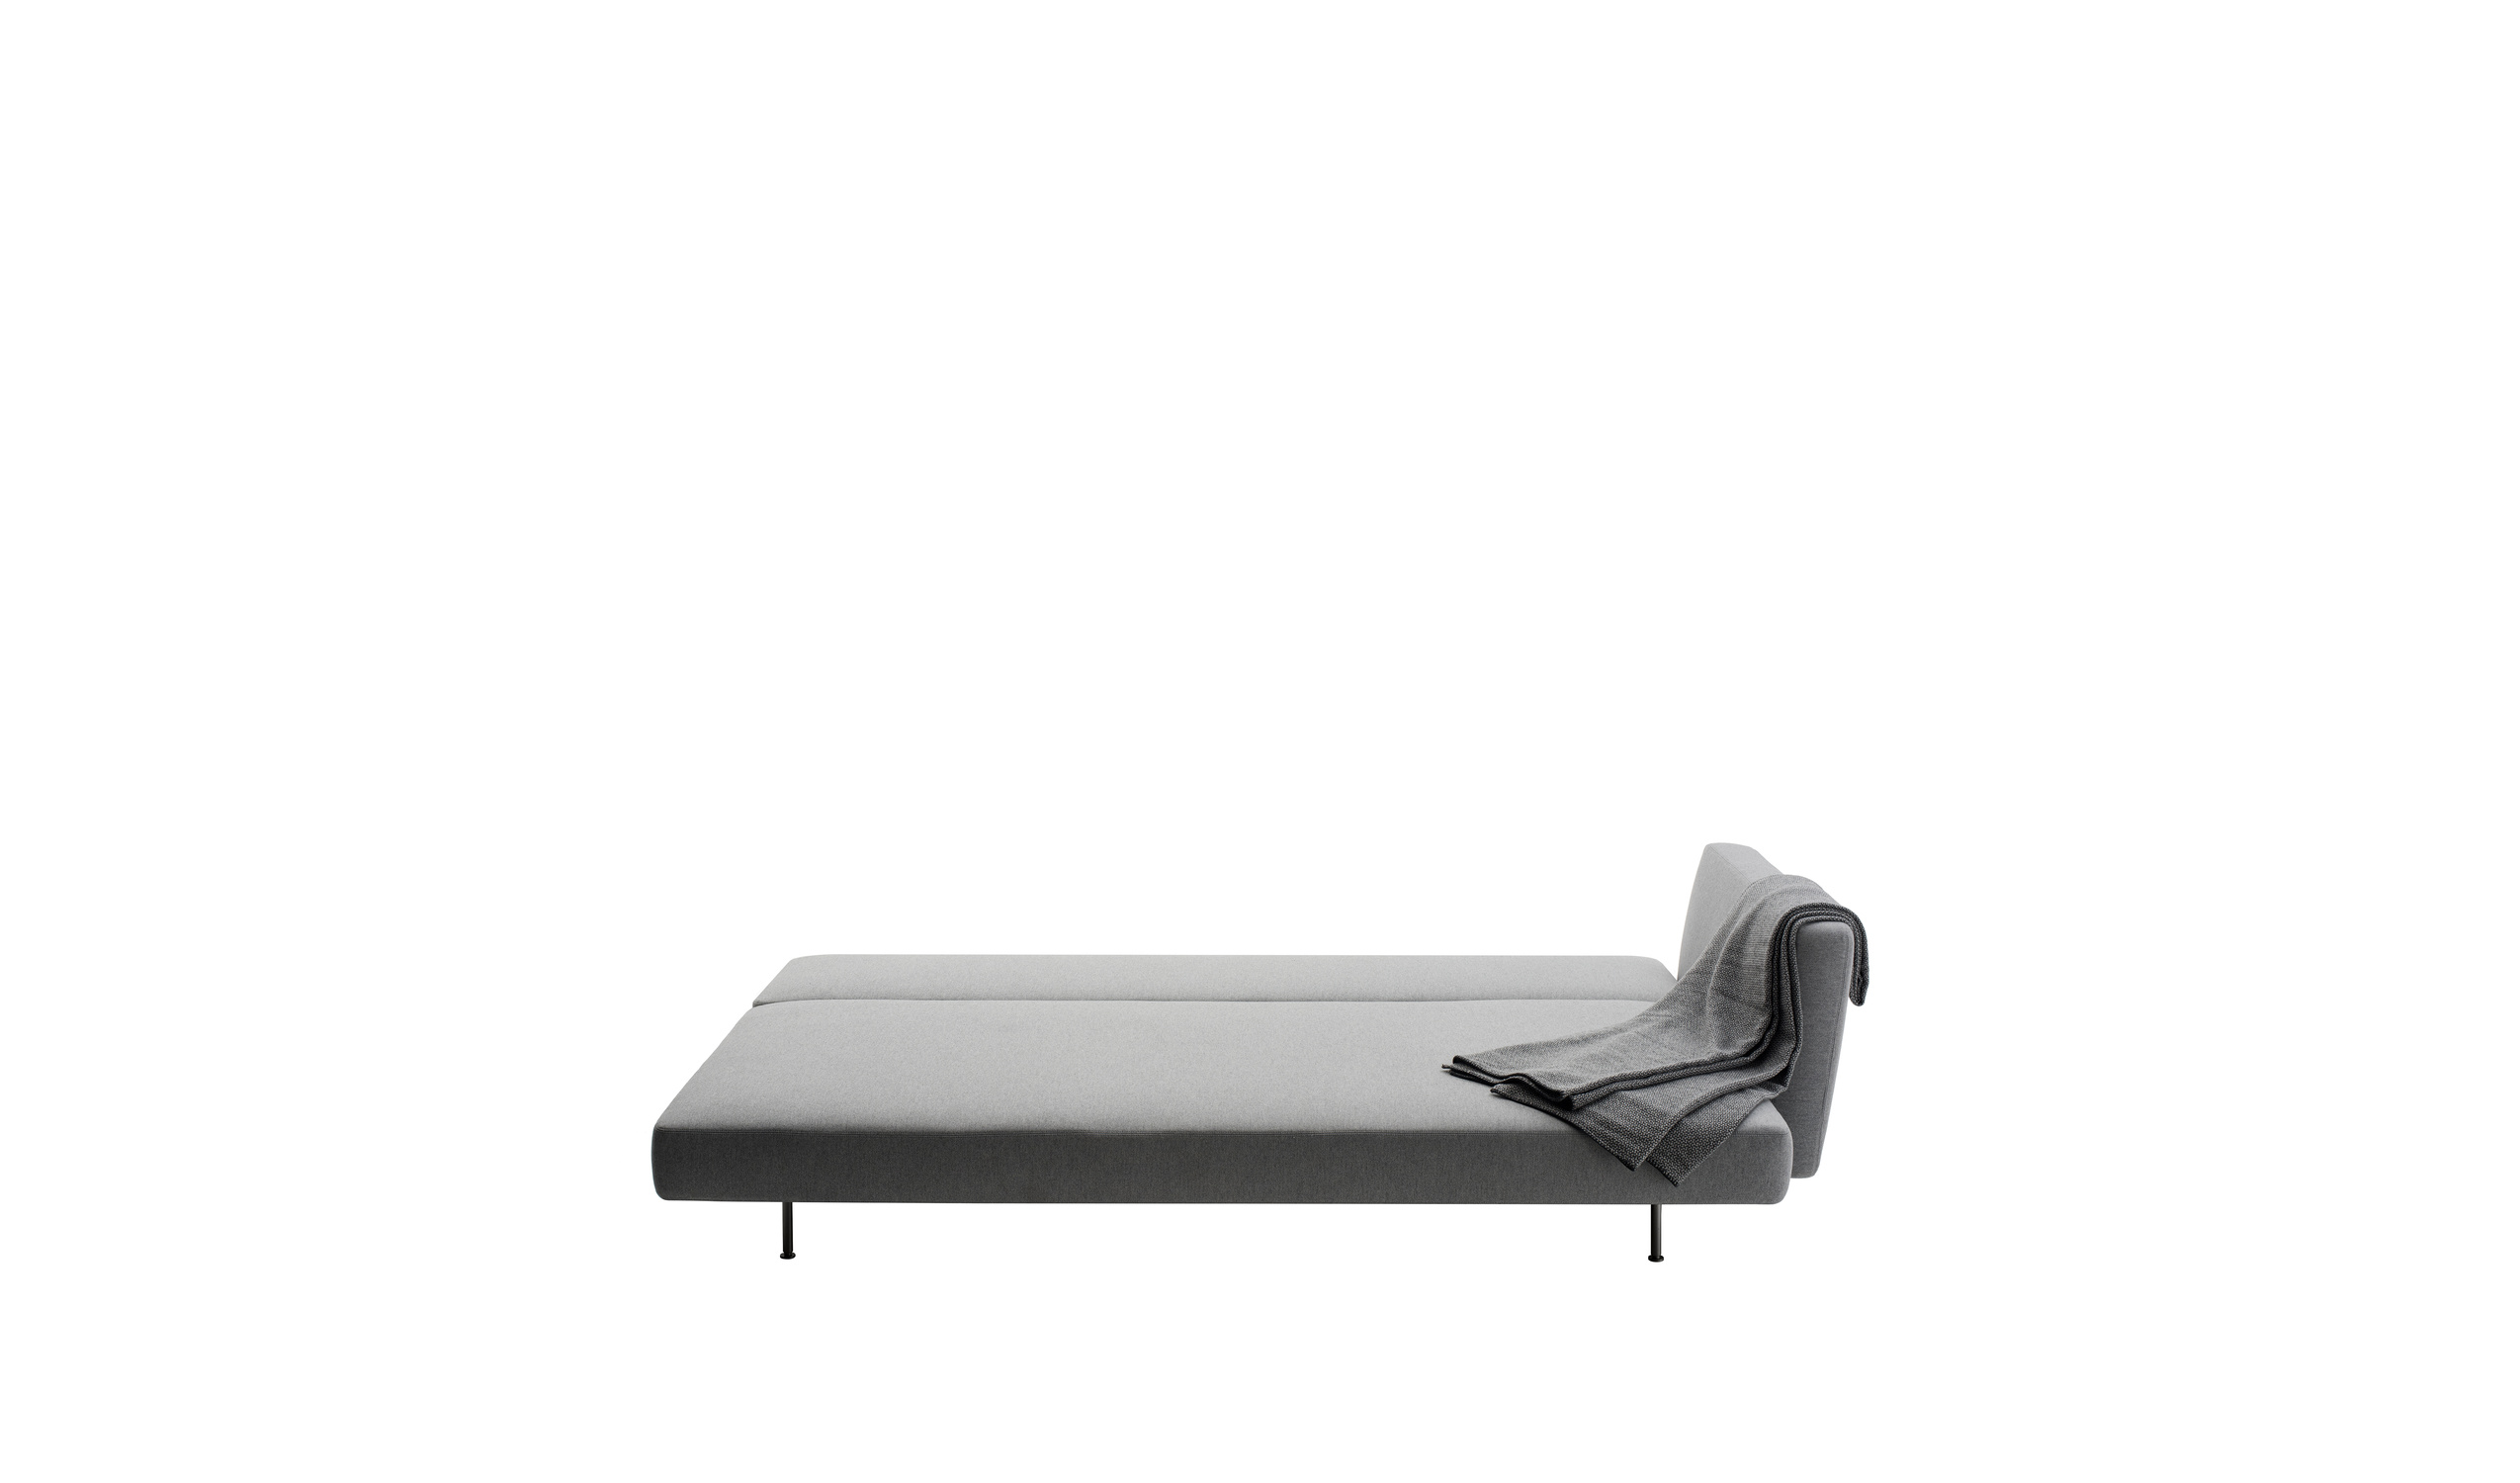 Designer Italian modern beds - Saké Beds 1